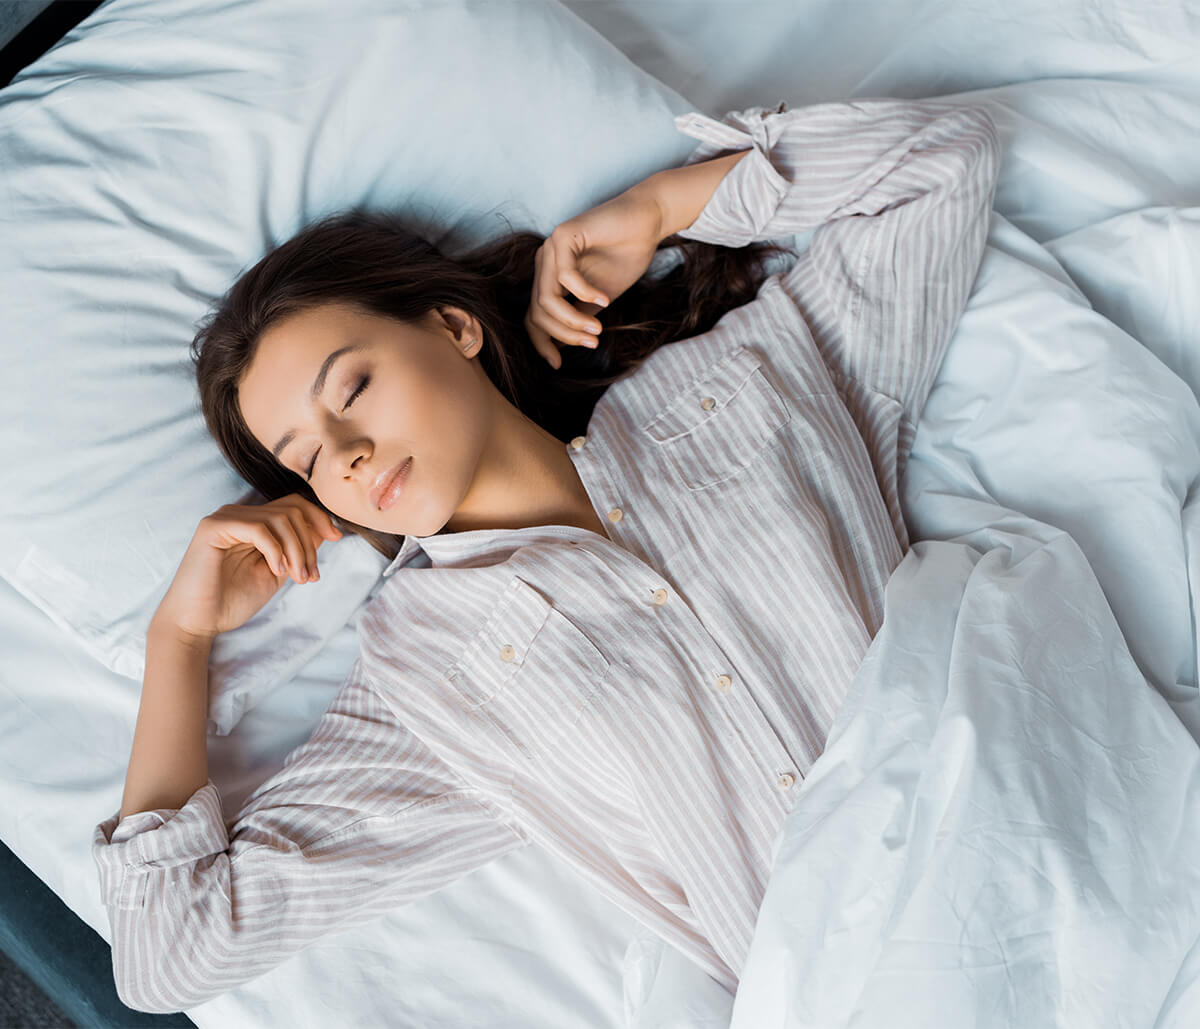 Sleep Apnea and Snoring Solutions in Longview TX Area